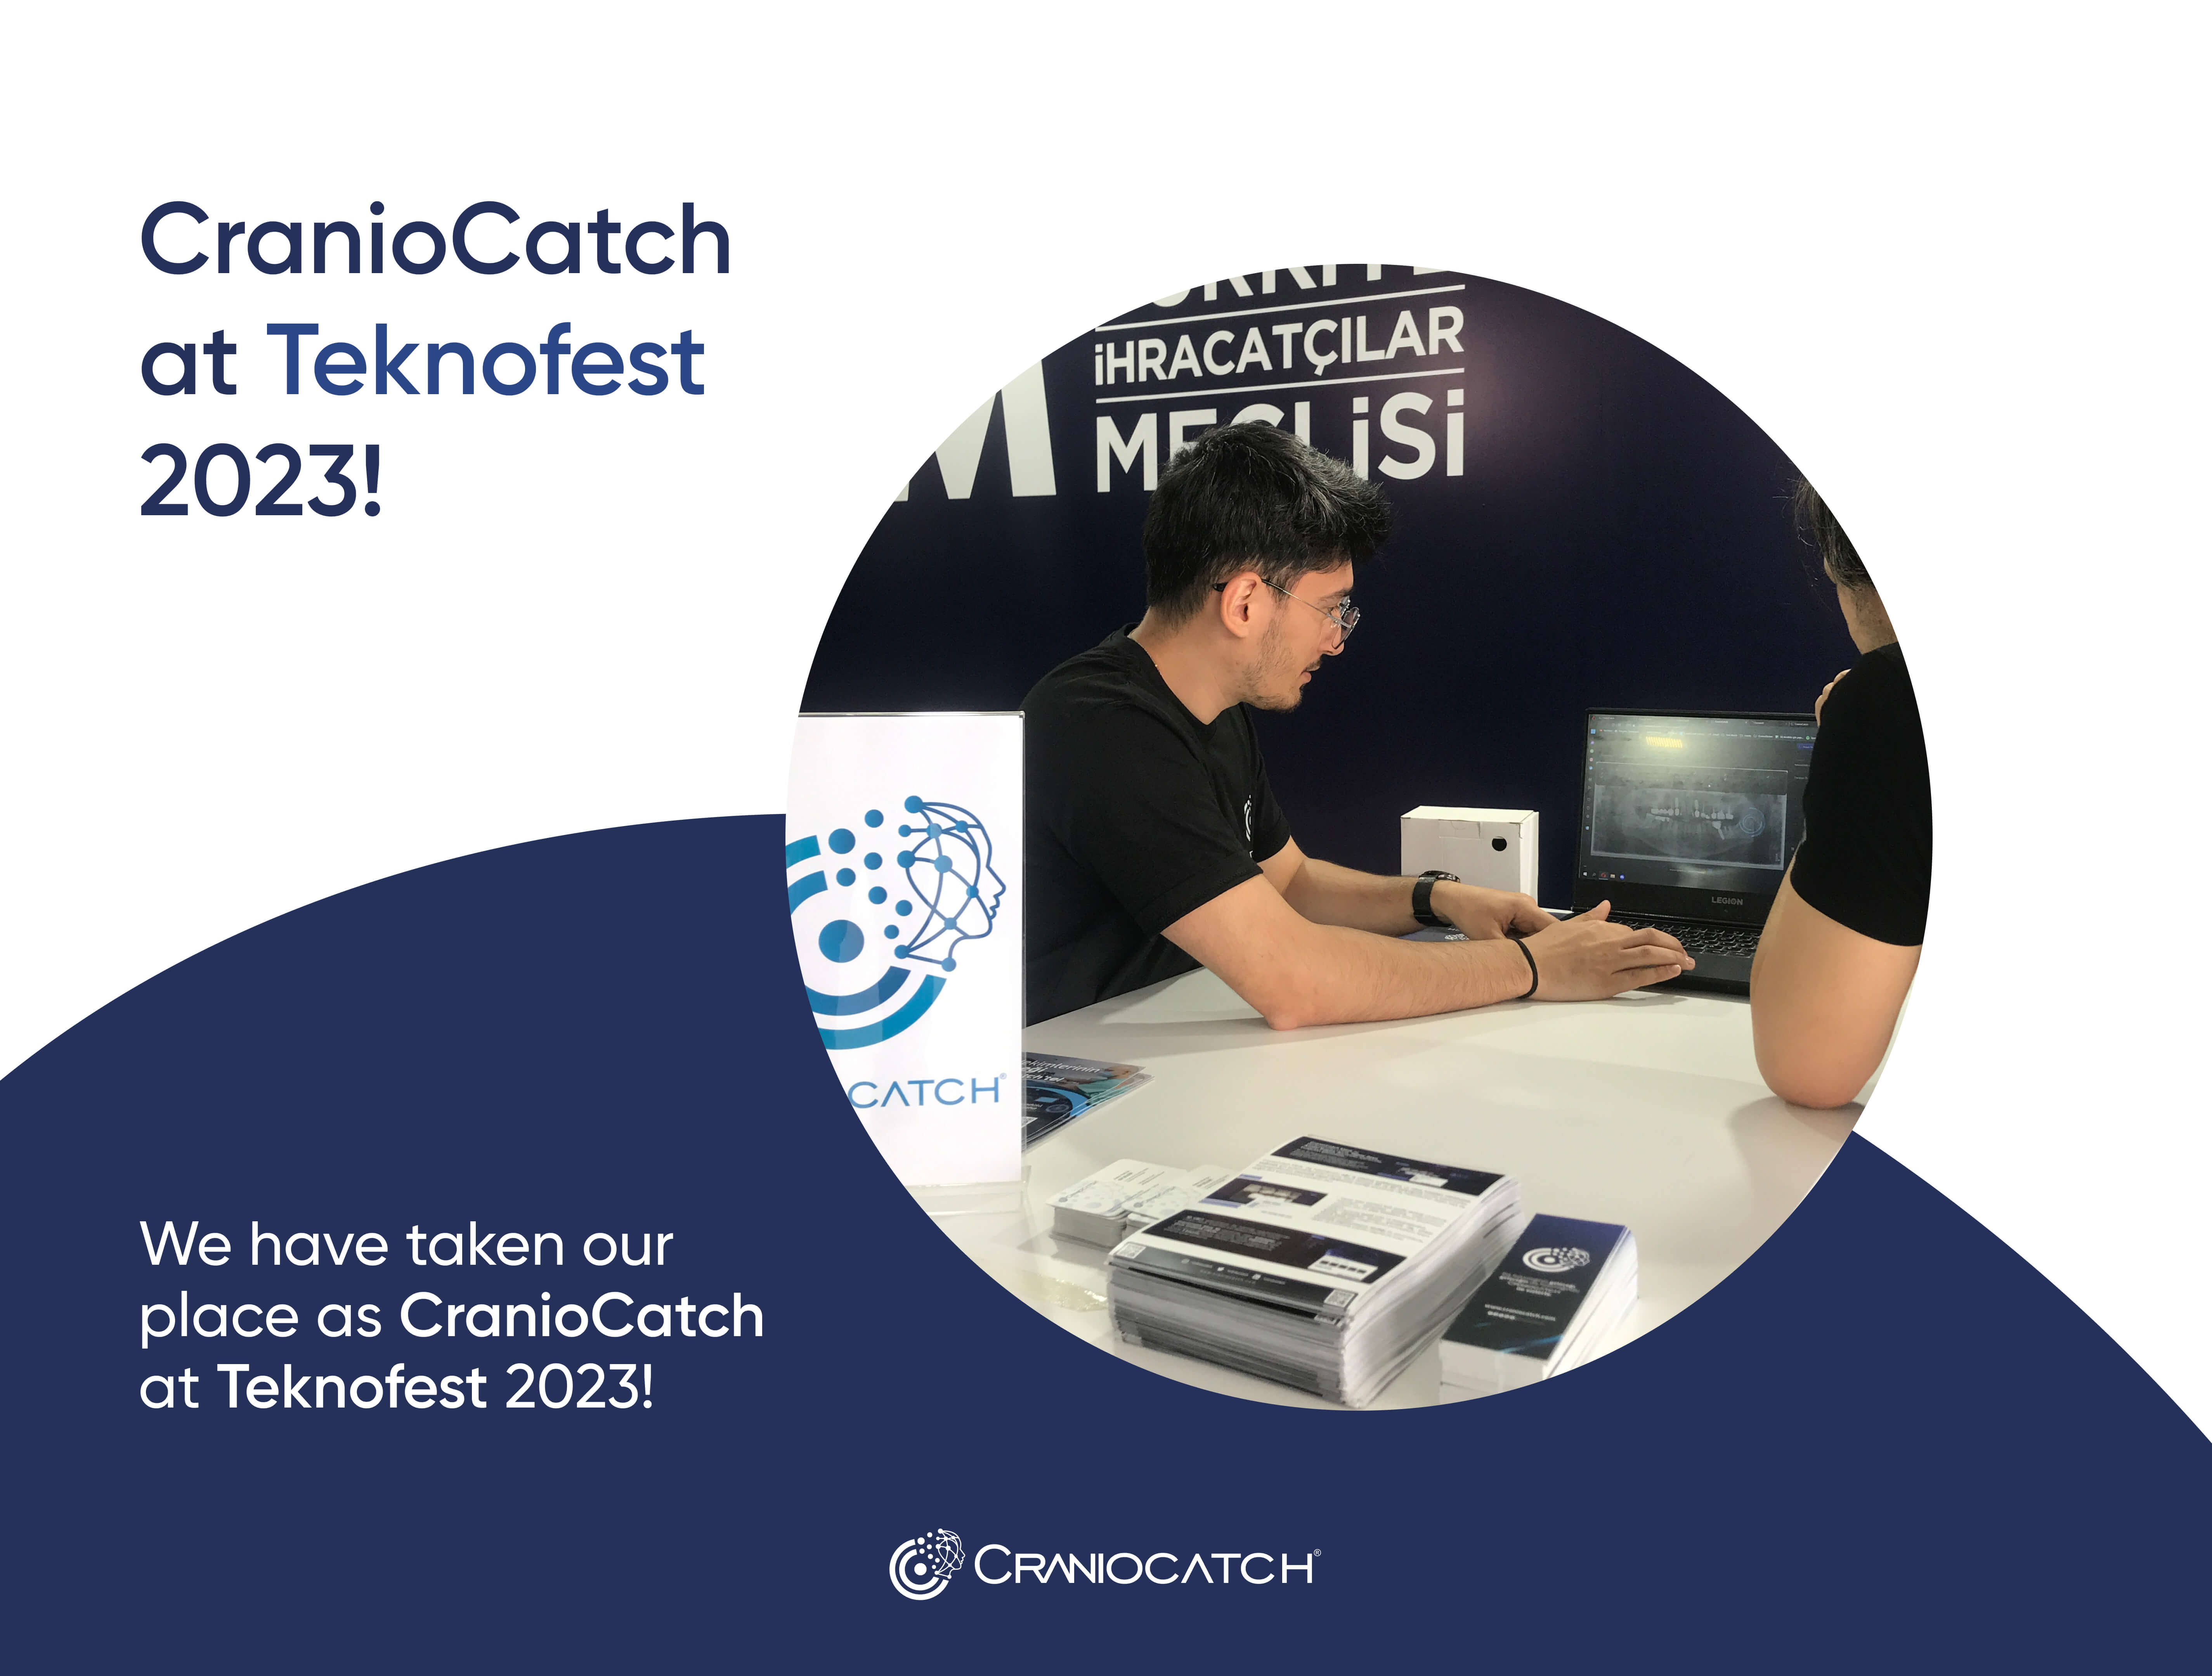 CranioCatch news and blog page - Teknofest 2023.